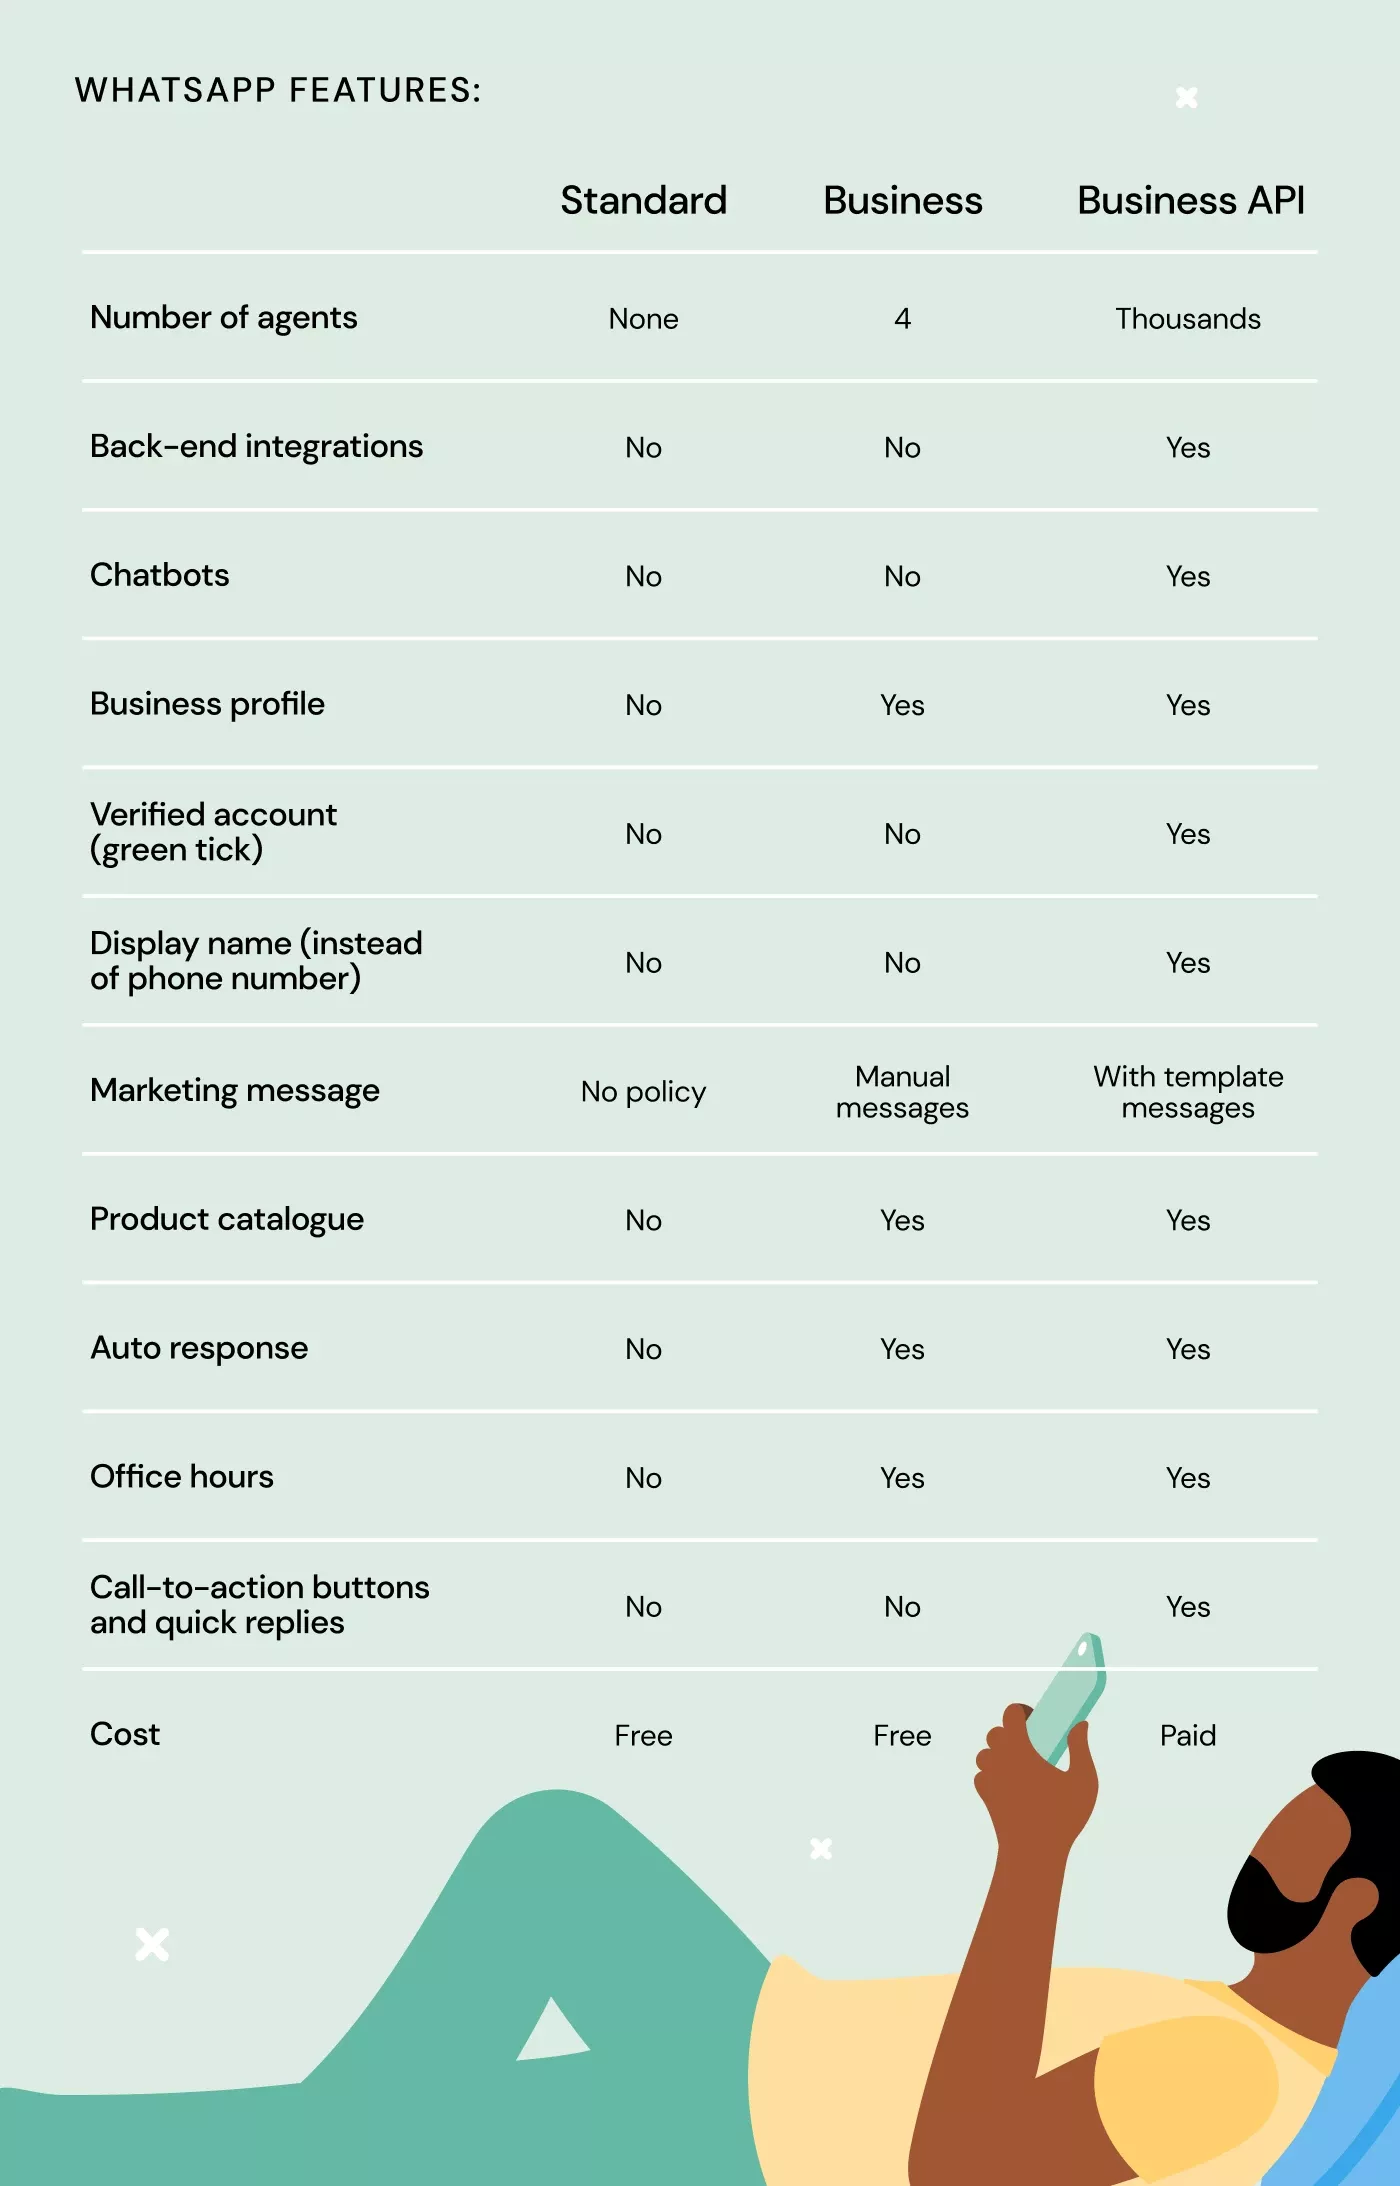 WhatsApp vs WhatsApp Business vs WhatsApp Business API features compared